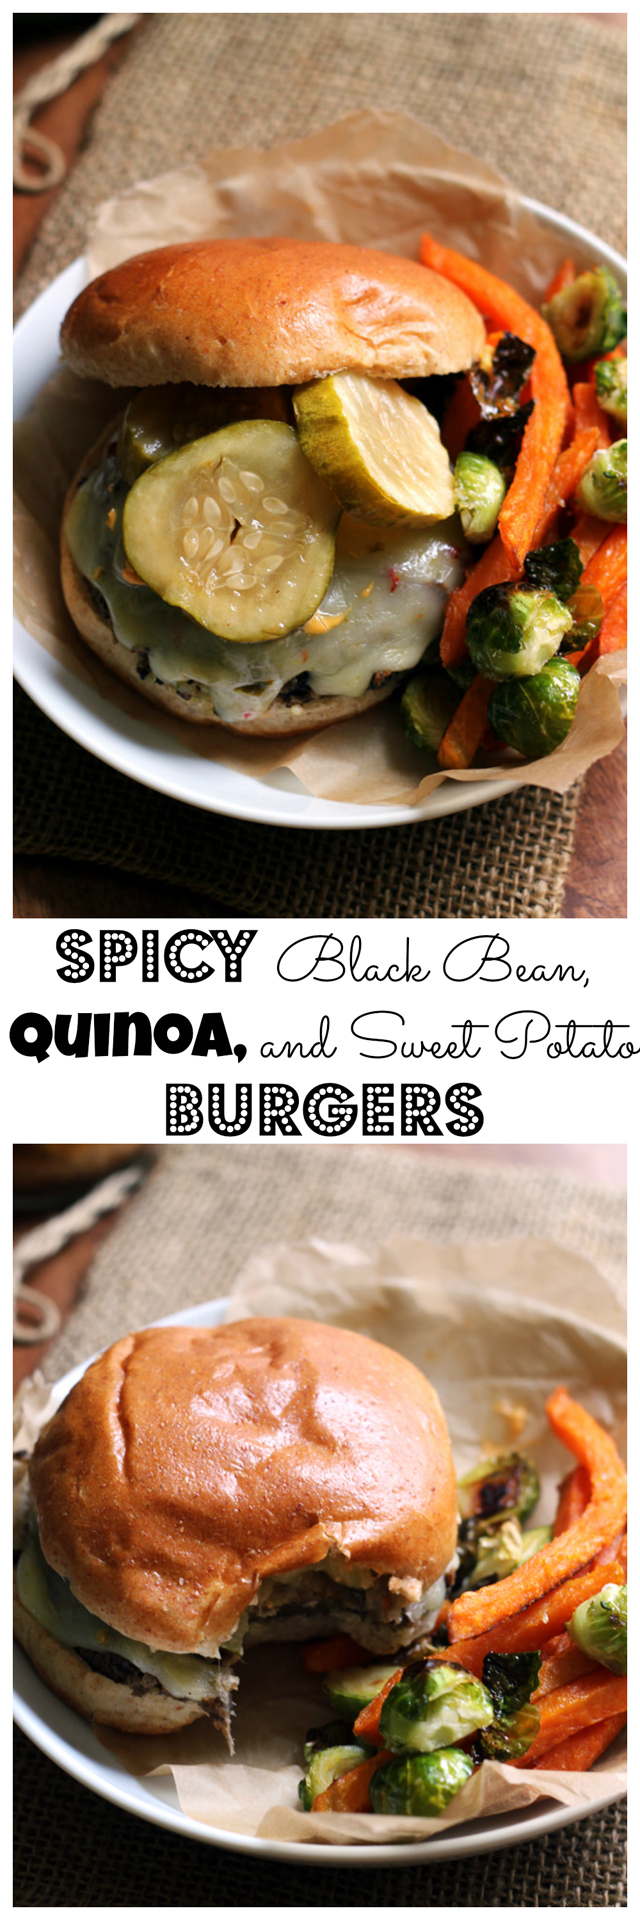 spicy black bean, quinoa, and sweet potato burgers